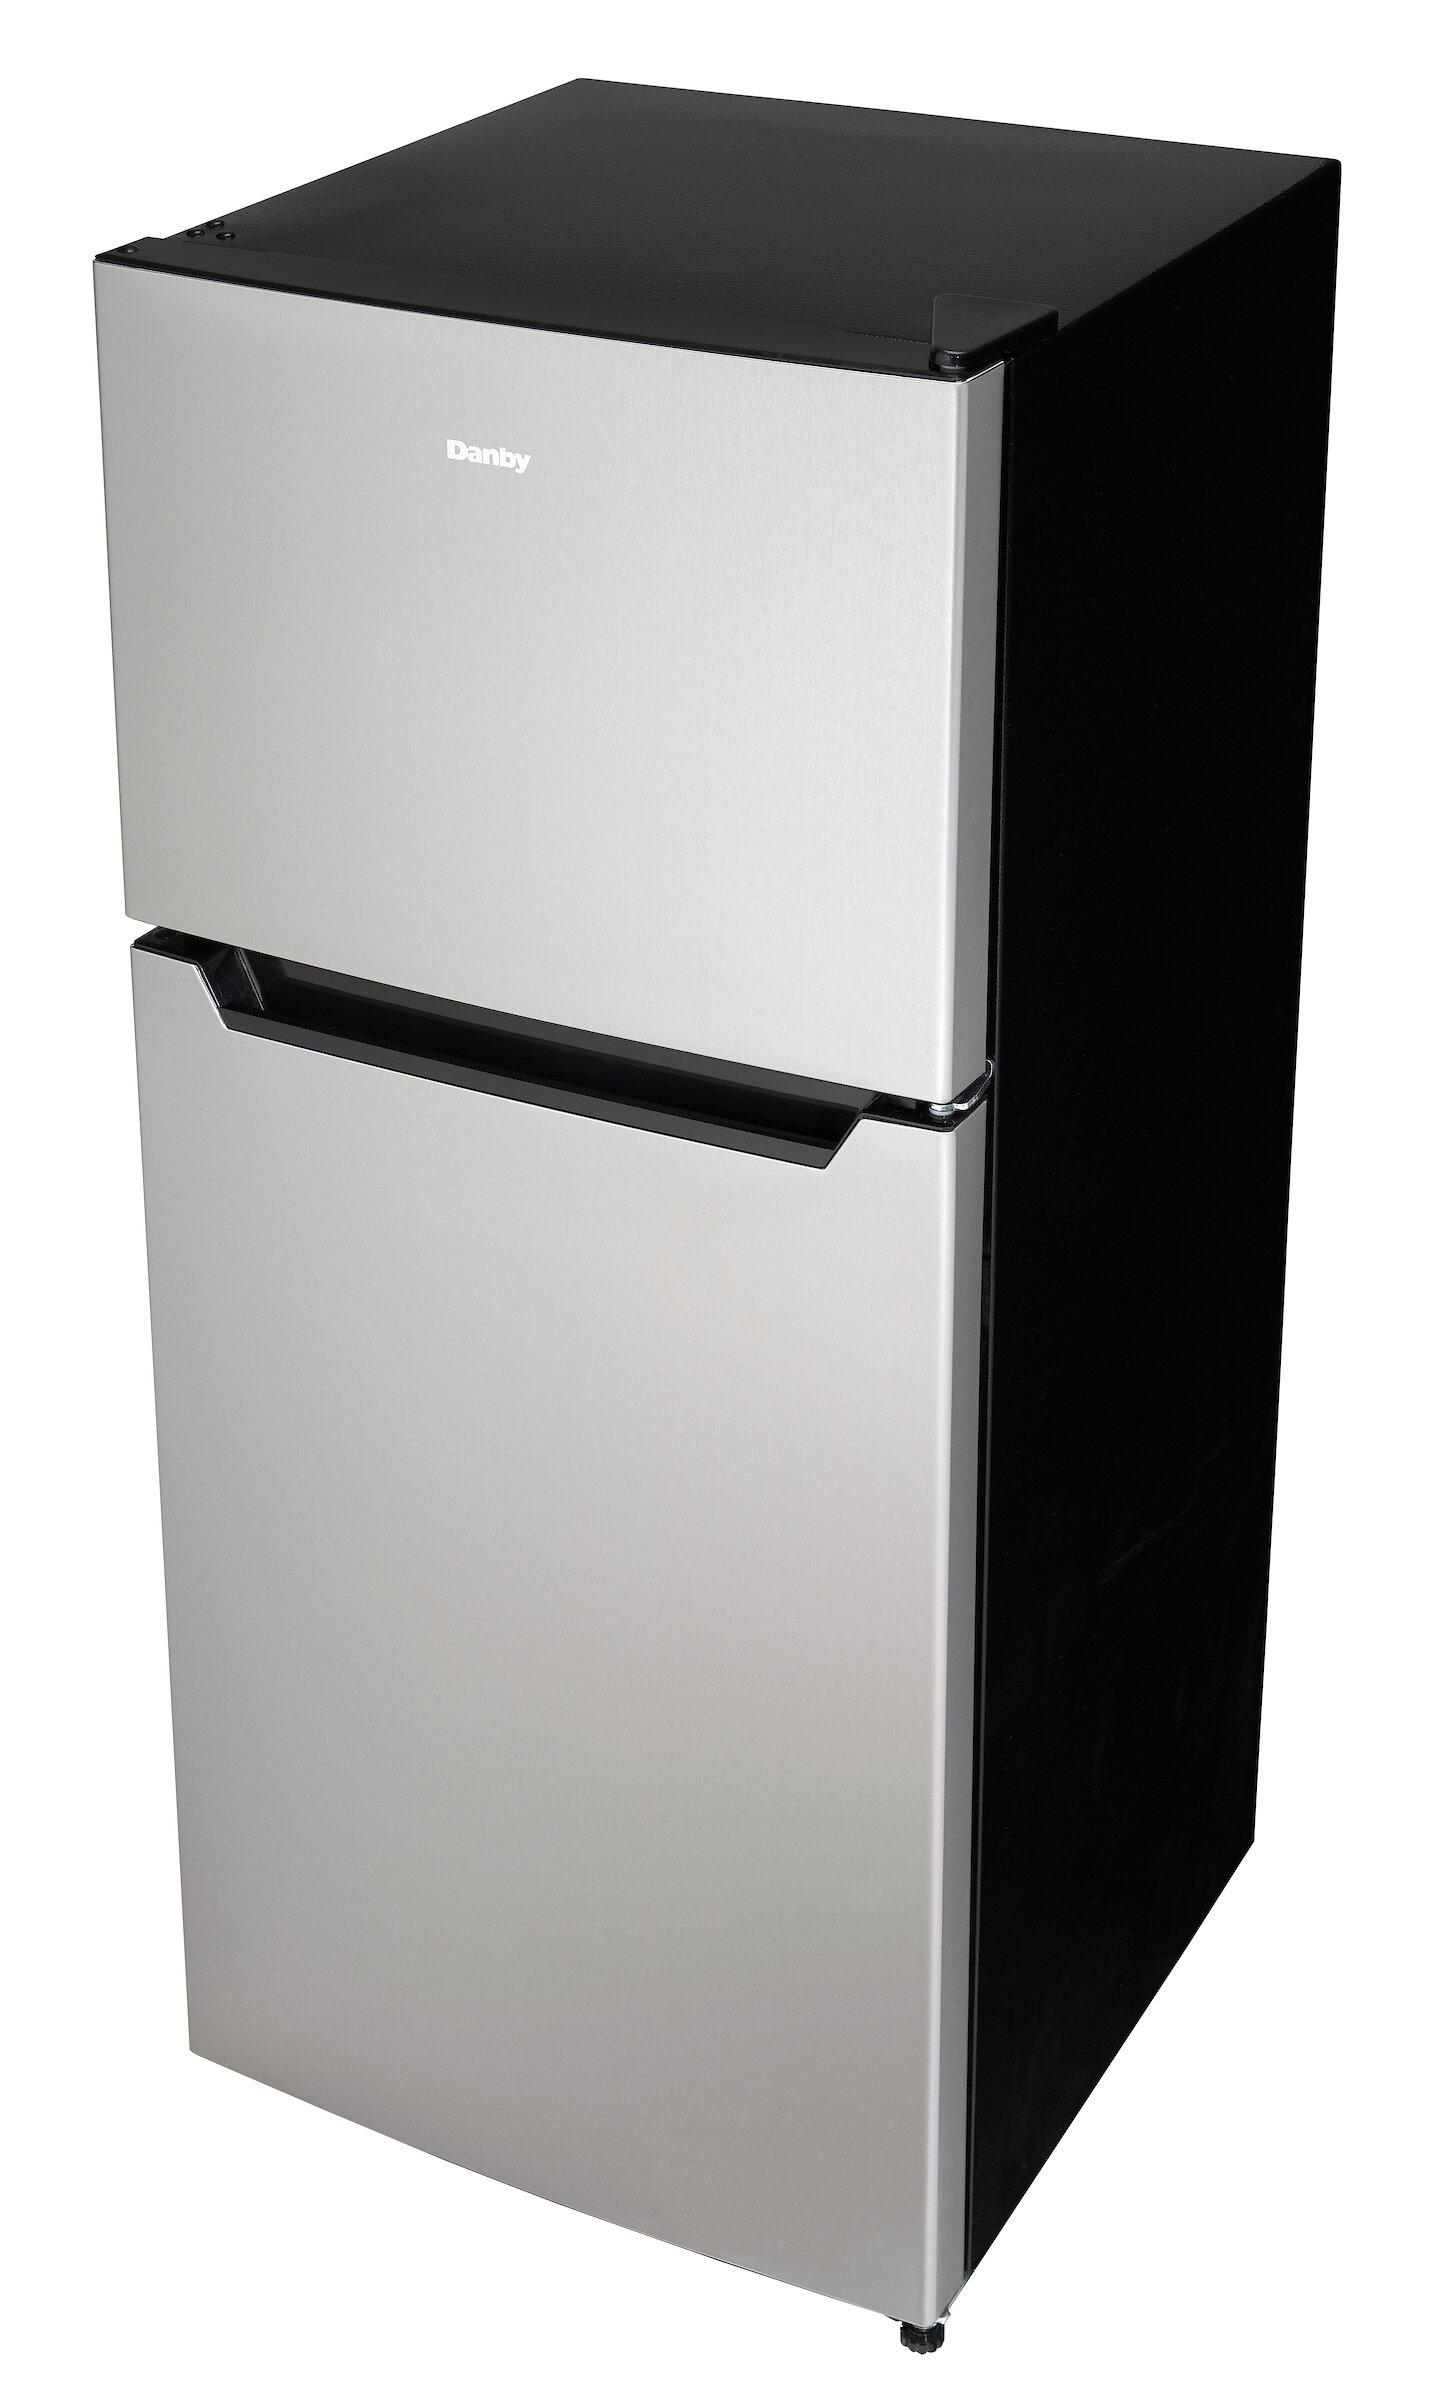 13++ Danby refrigerator freezer not freezing ideas in 2021 